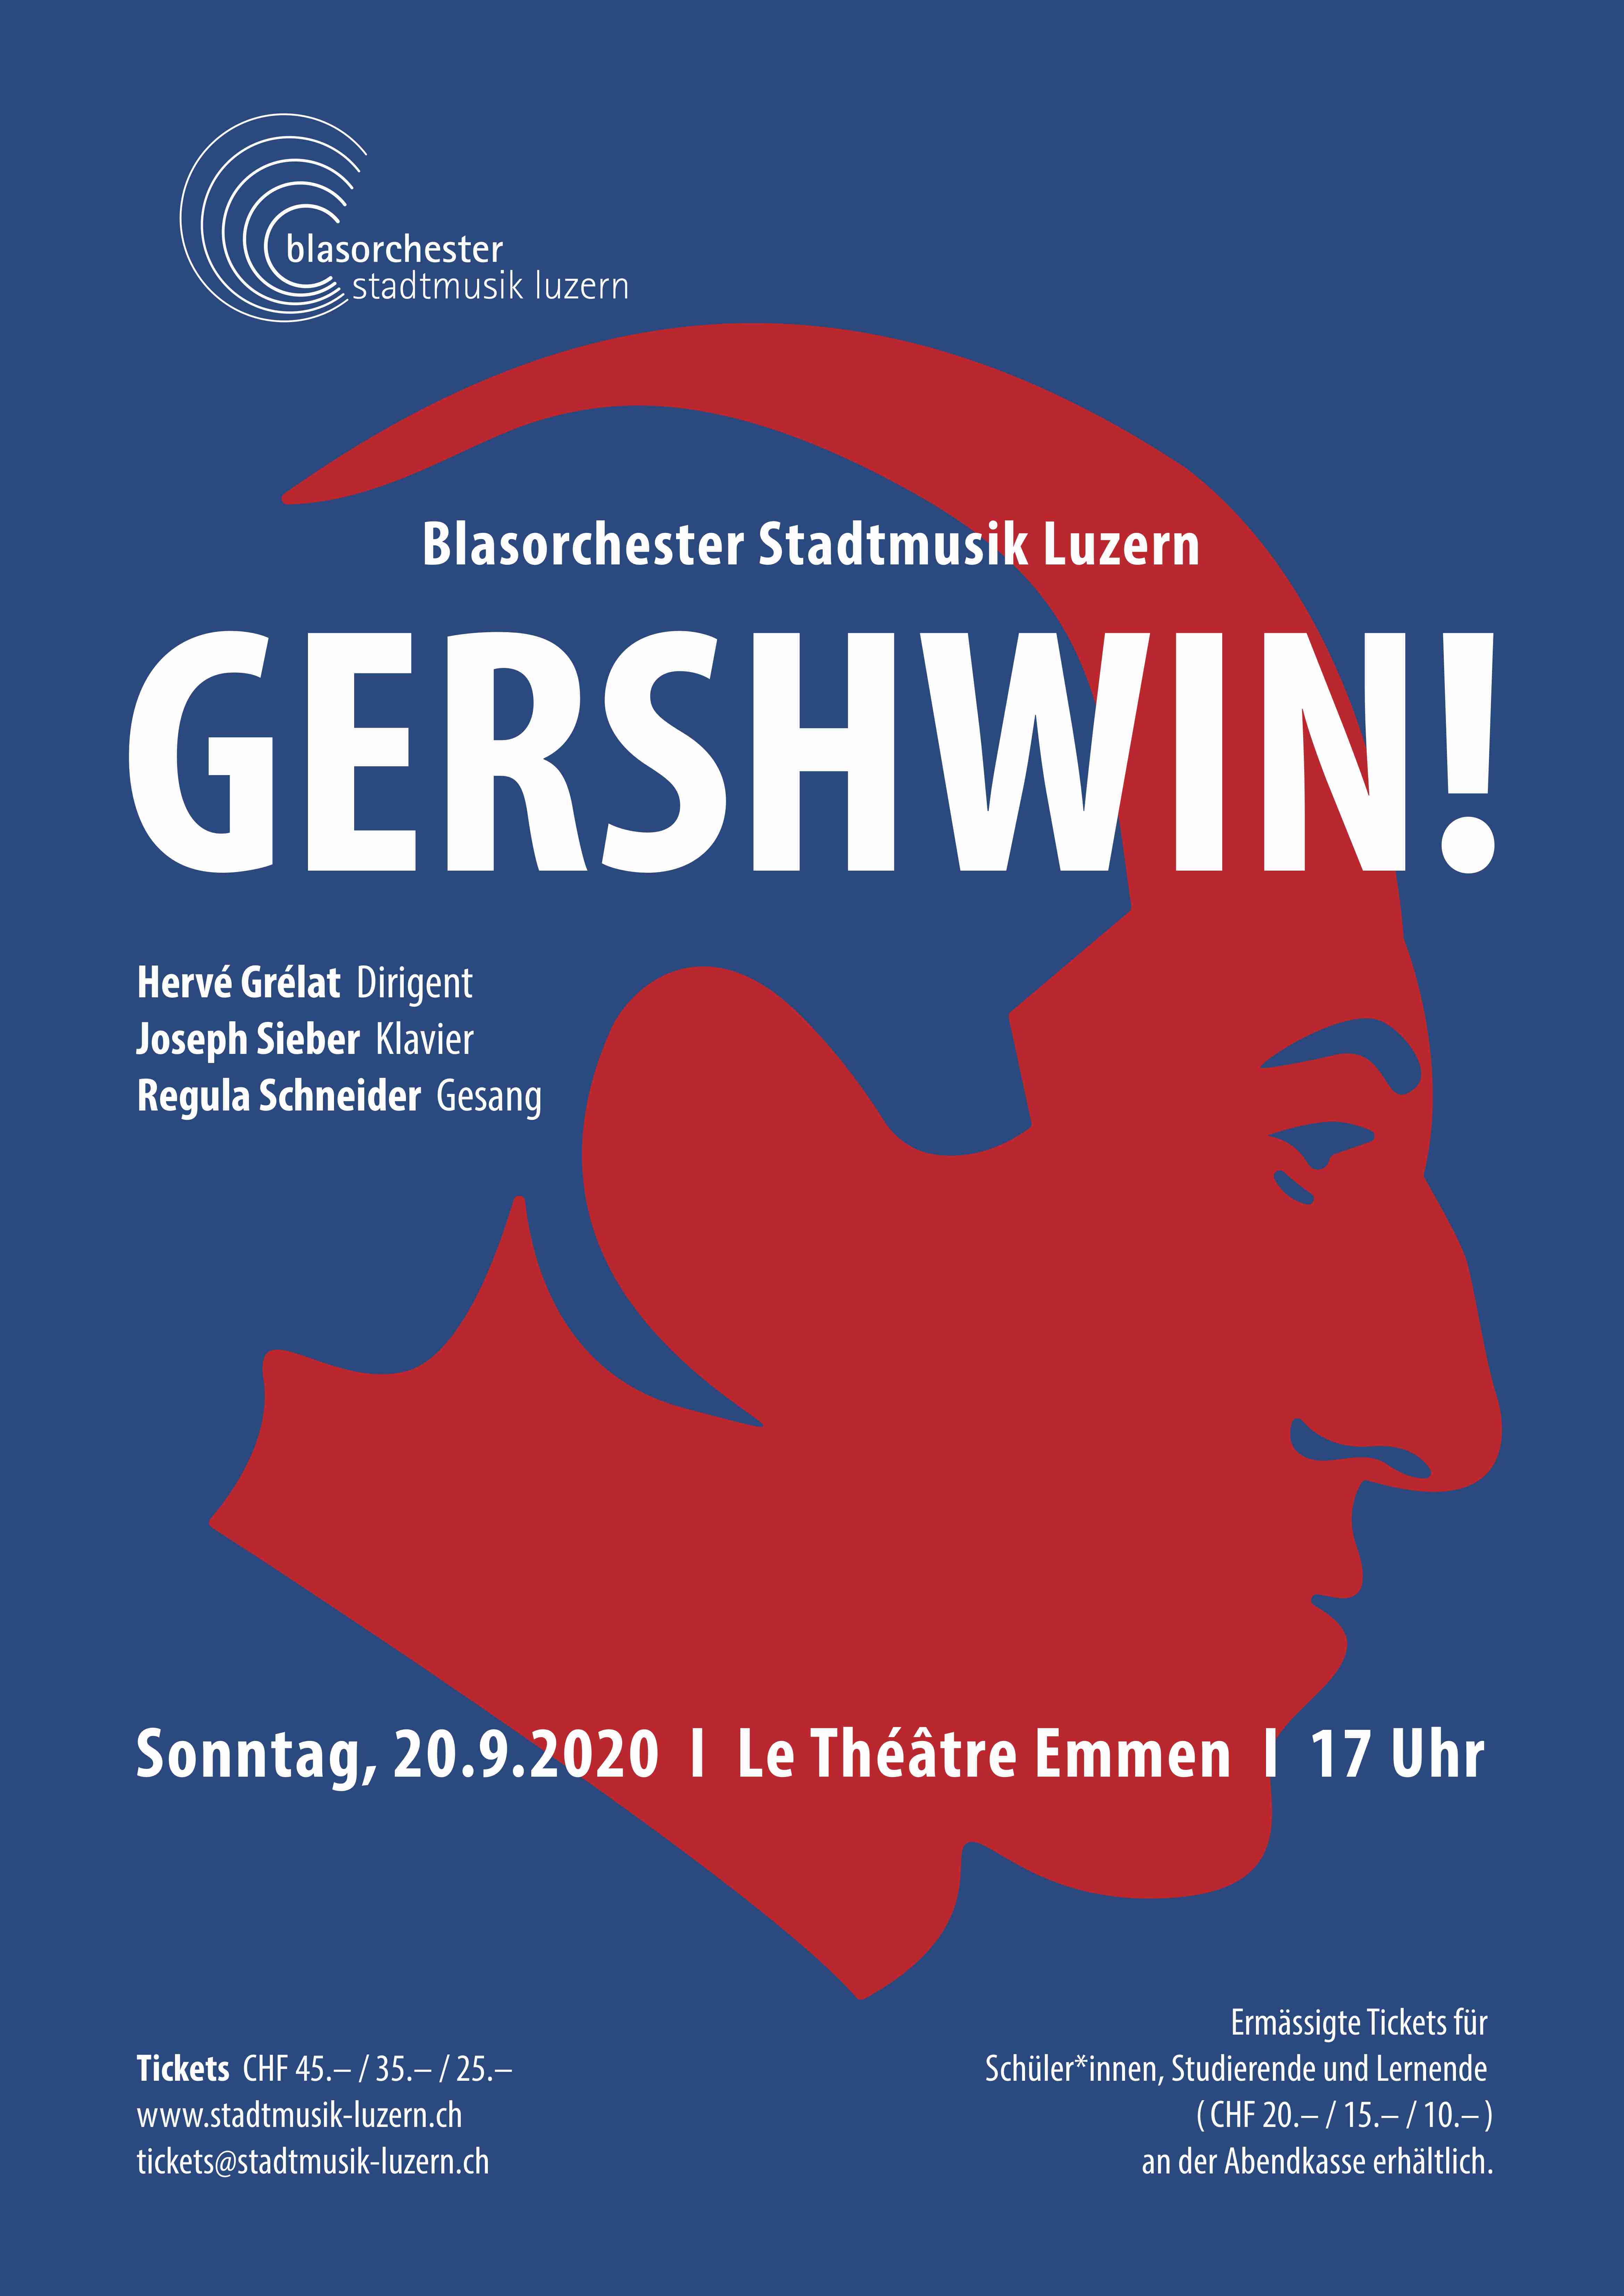 Herbstkonzert 2020 "Gershwin!"